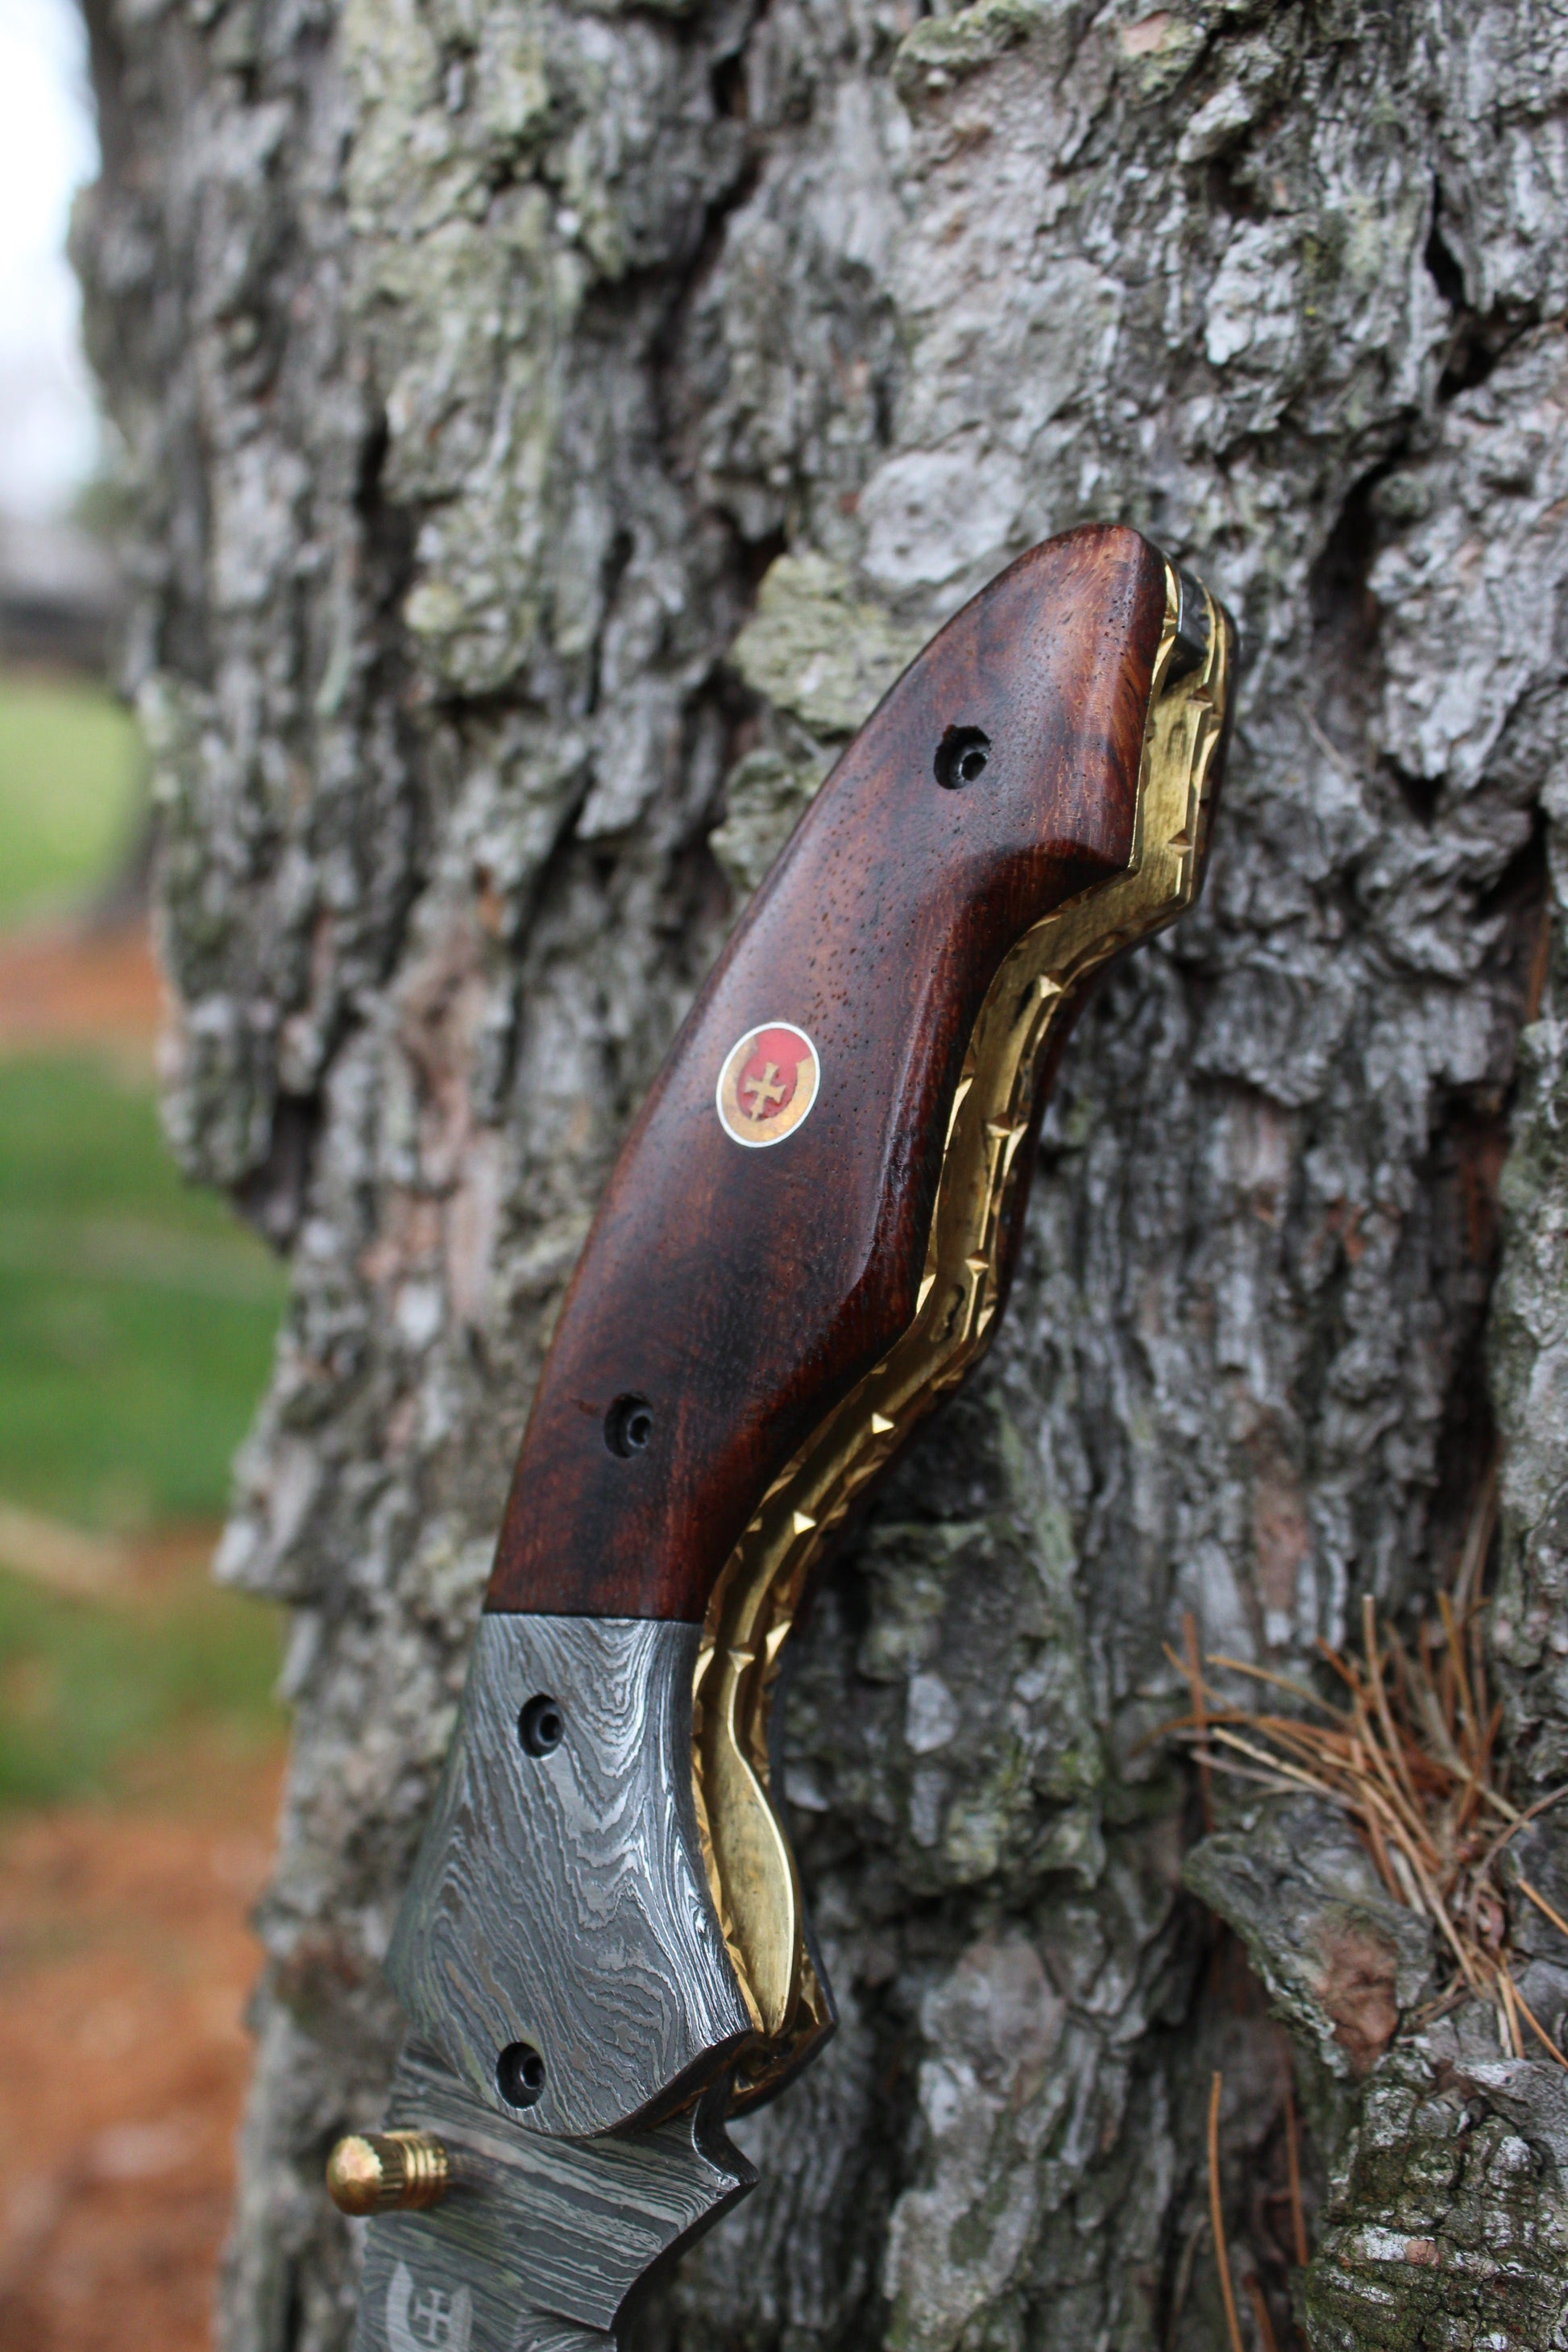 Damascus Steel Karambit Knife with a Rosewood Handle – RainwatersEdge